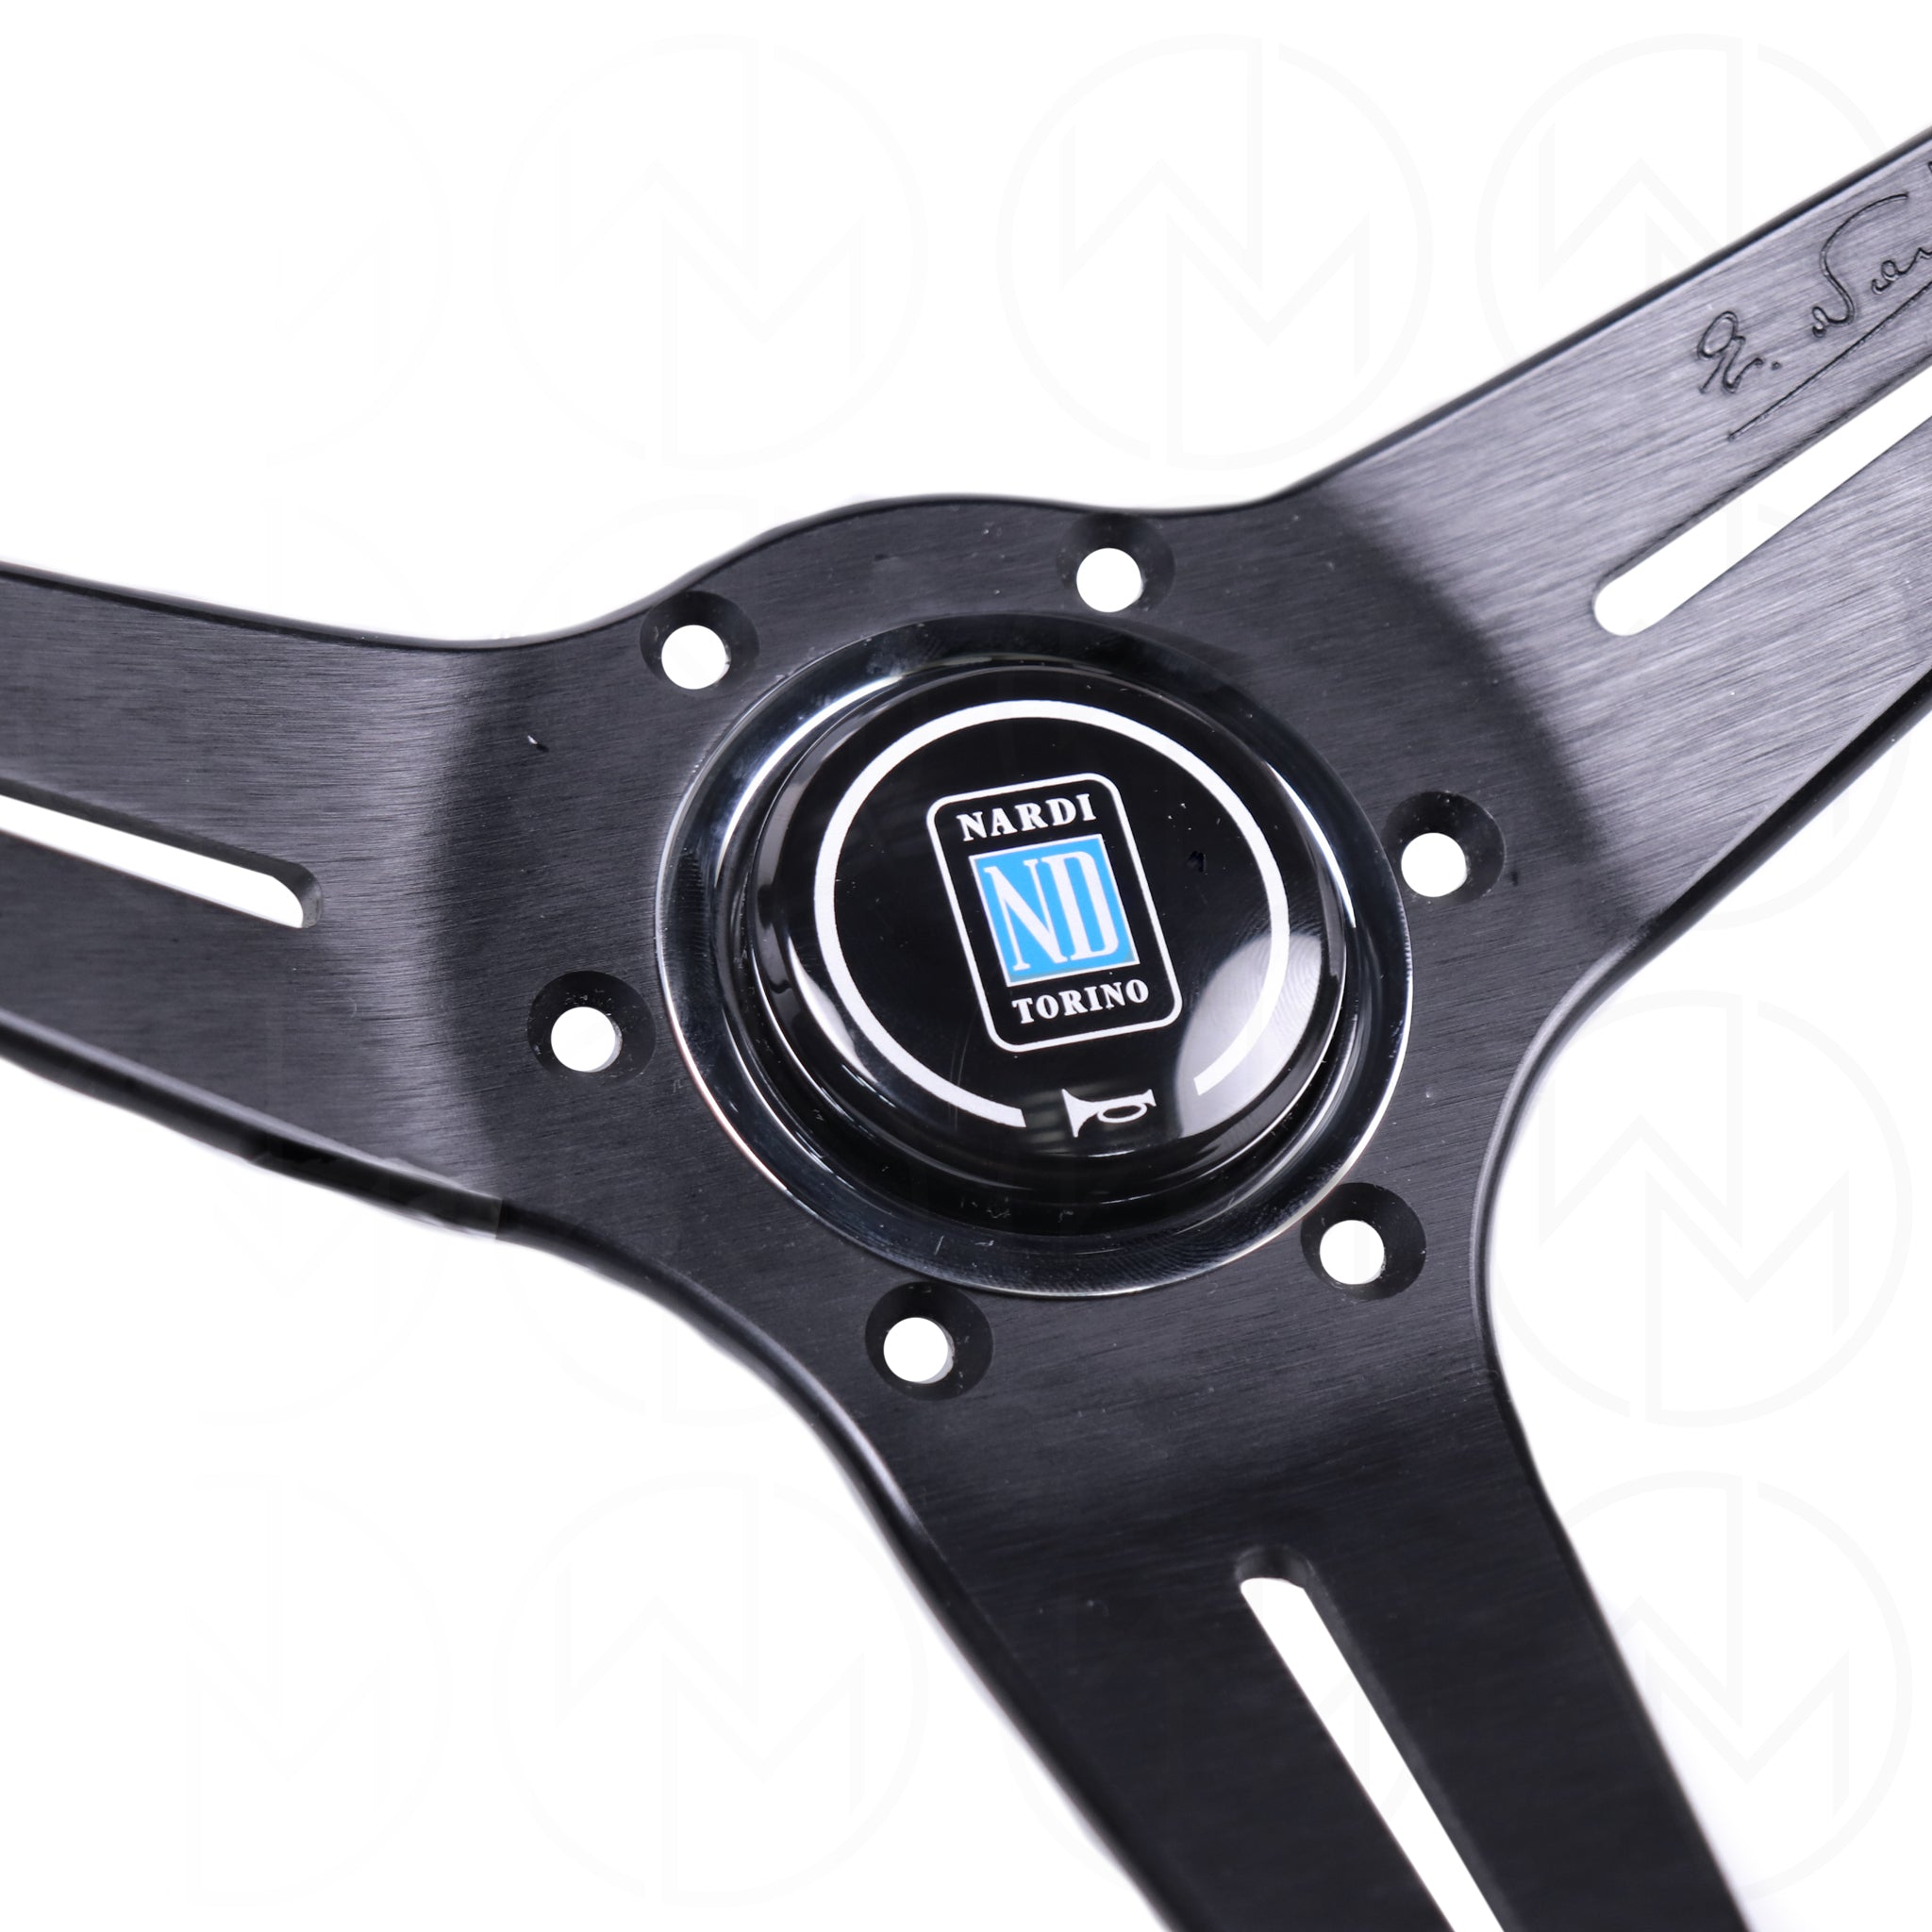 Nardi Sport Rally Deep Corn Steering Wheel - 350mm Perforated Leather w/Blue Stitch